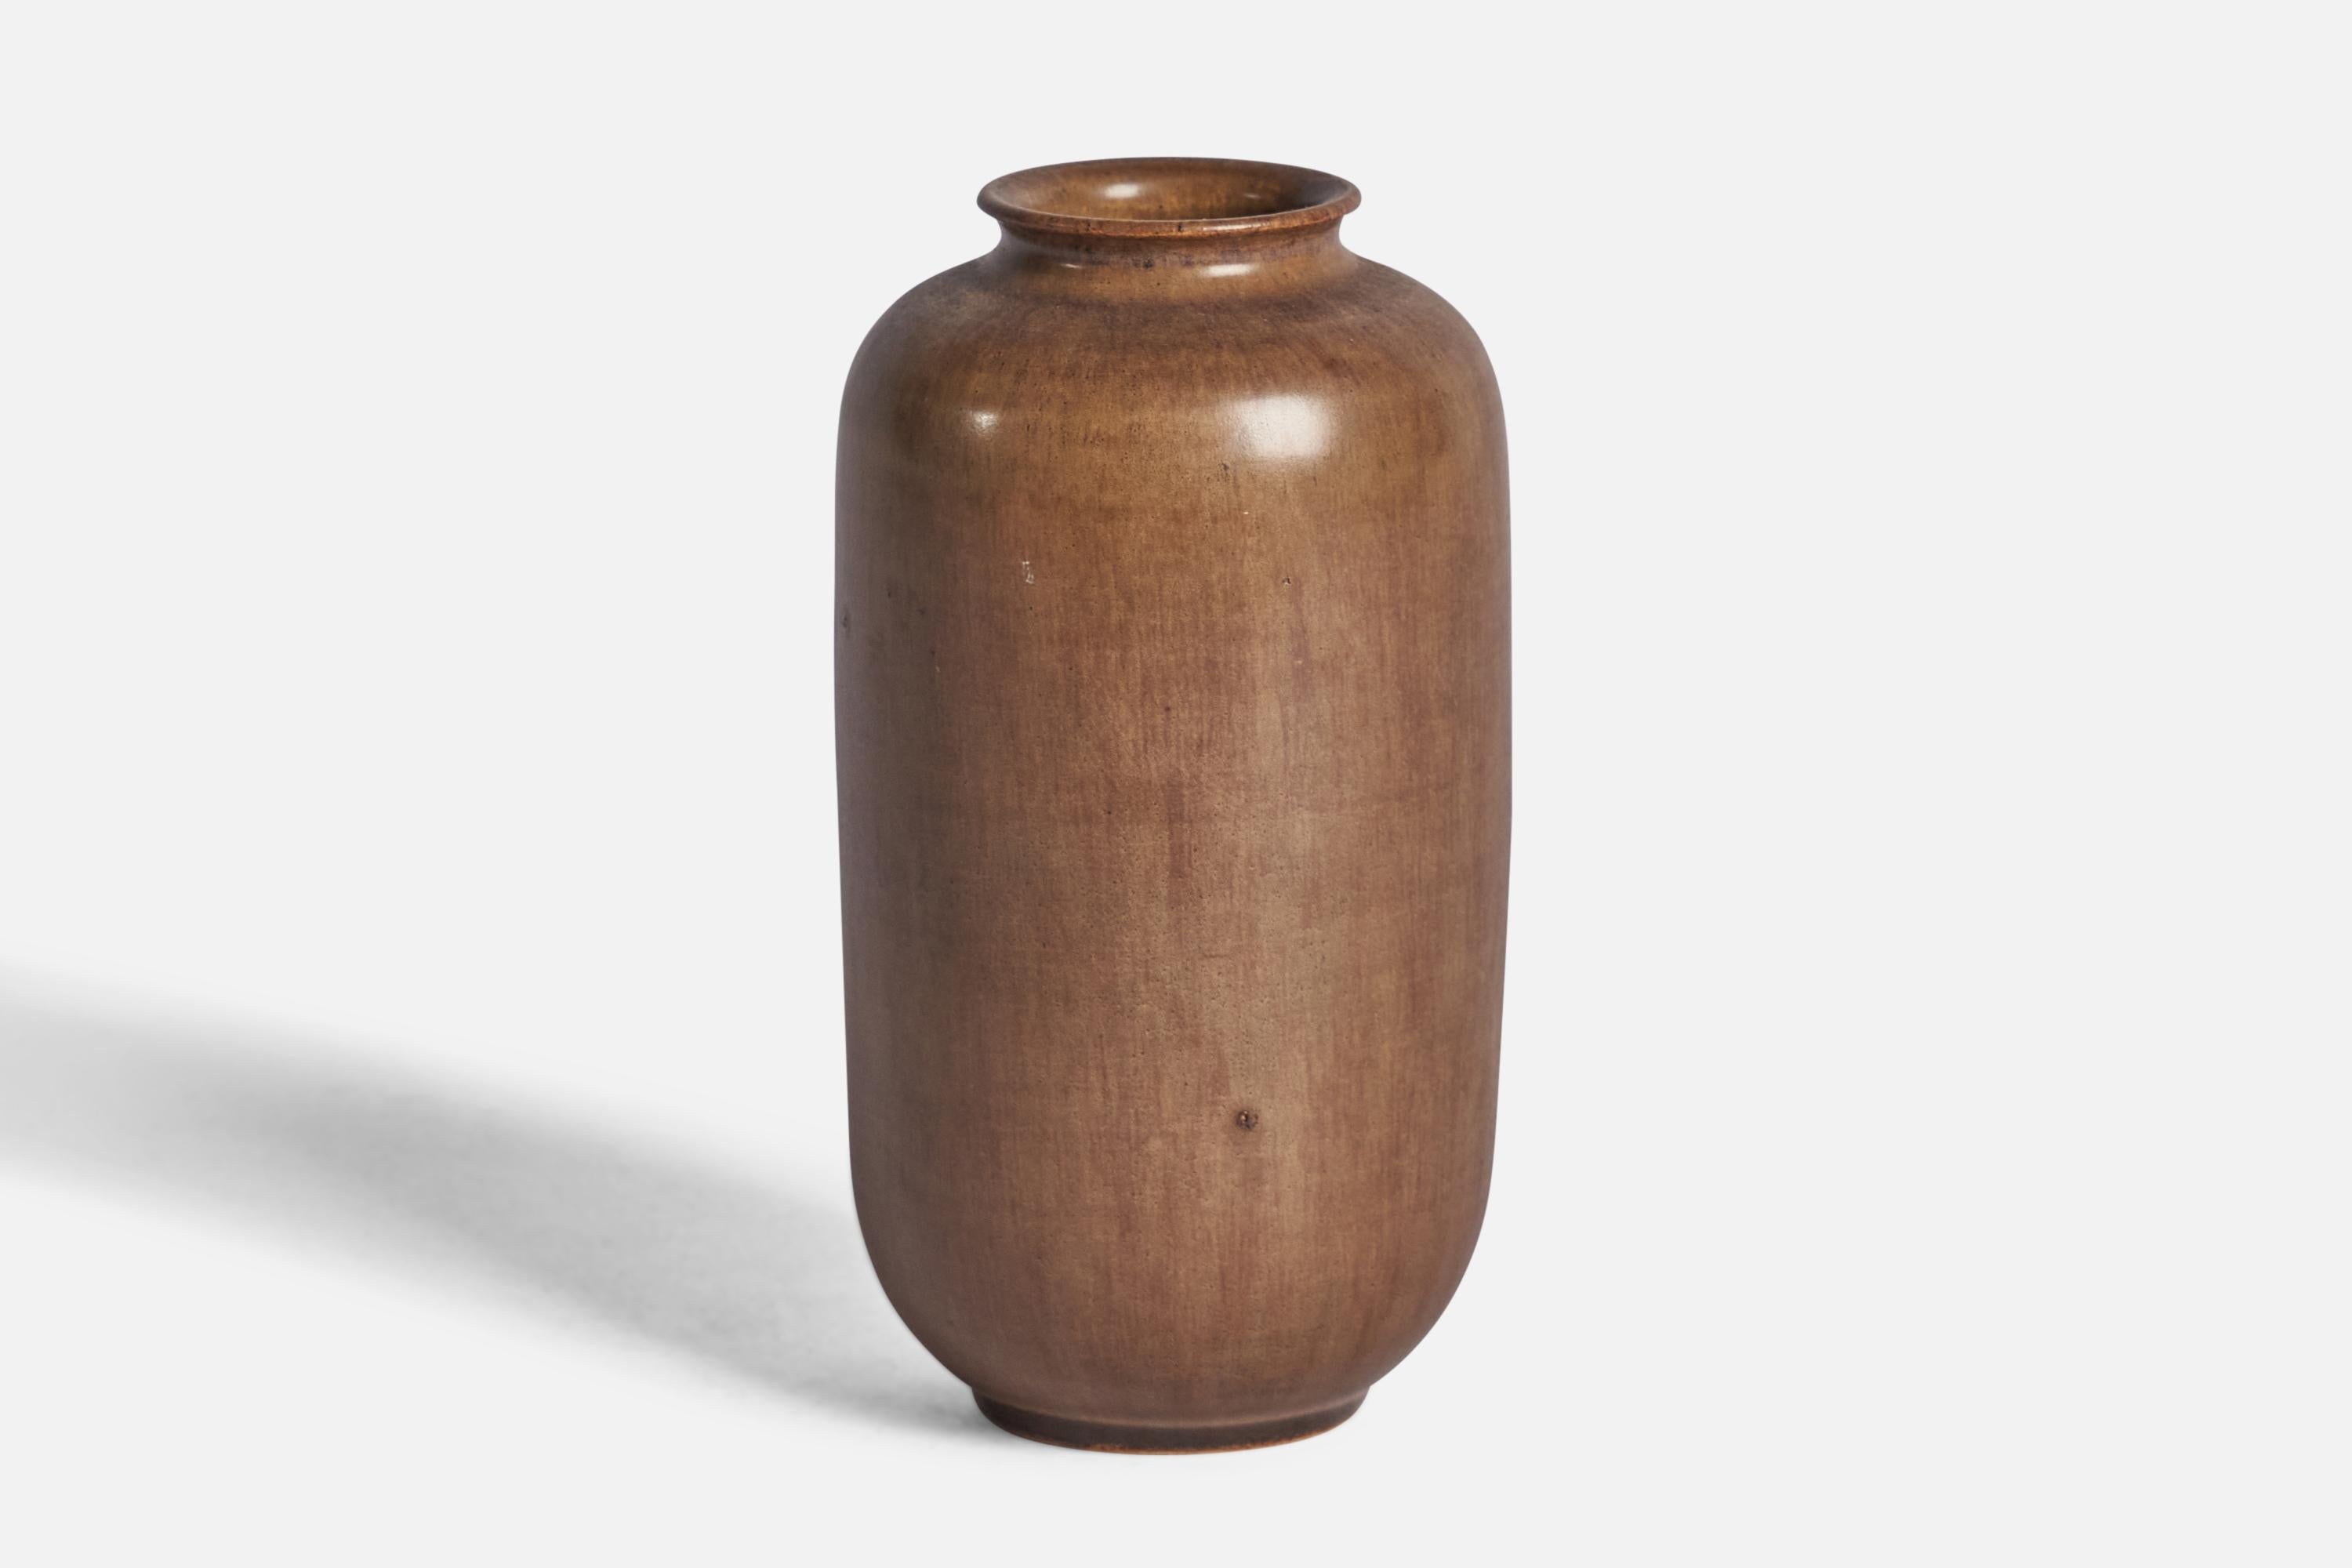 A brown-glazed stoneware vase designed and produced by Höganäs Keramik, Sweden, 1950s.
“HÖGANAS” on bottom